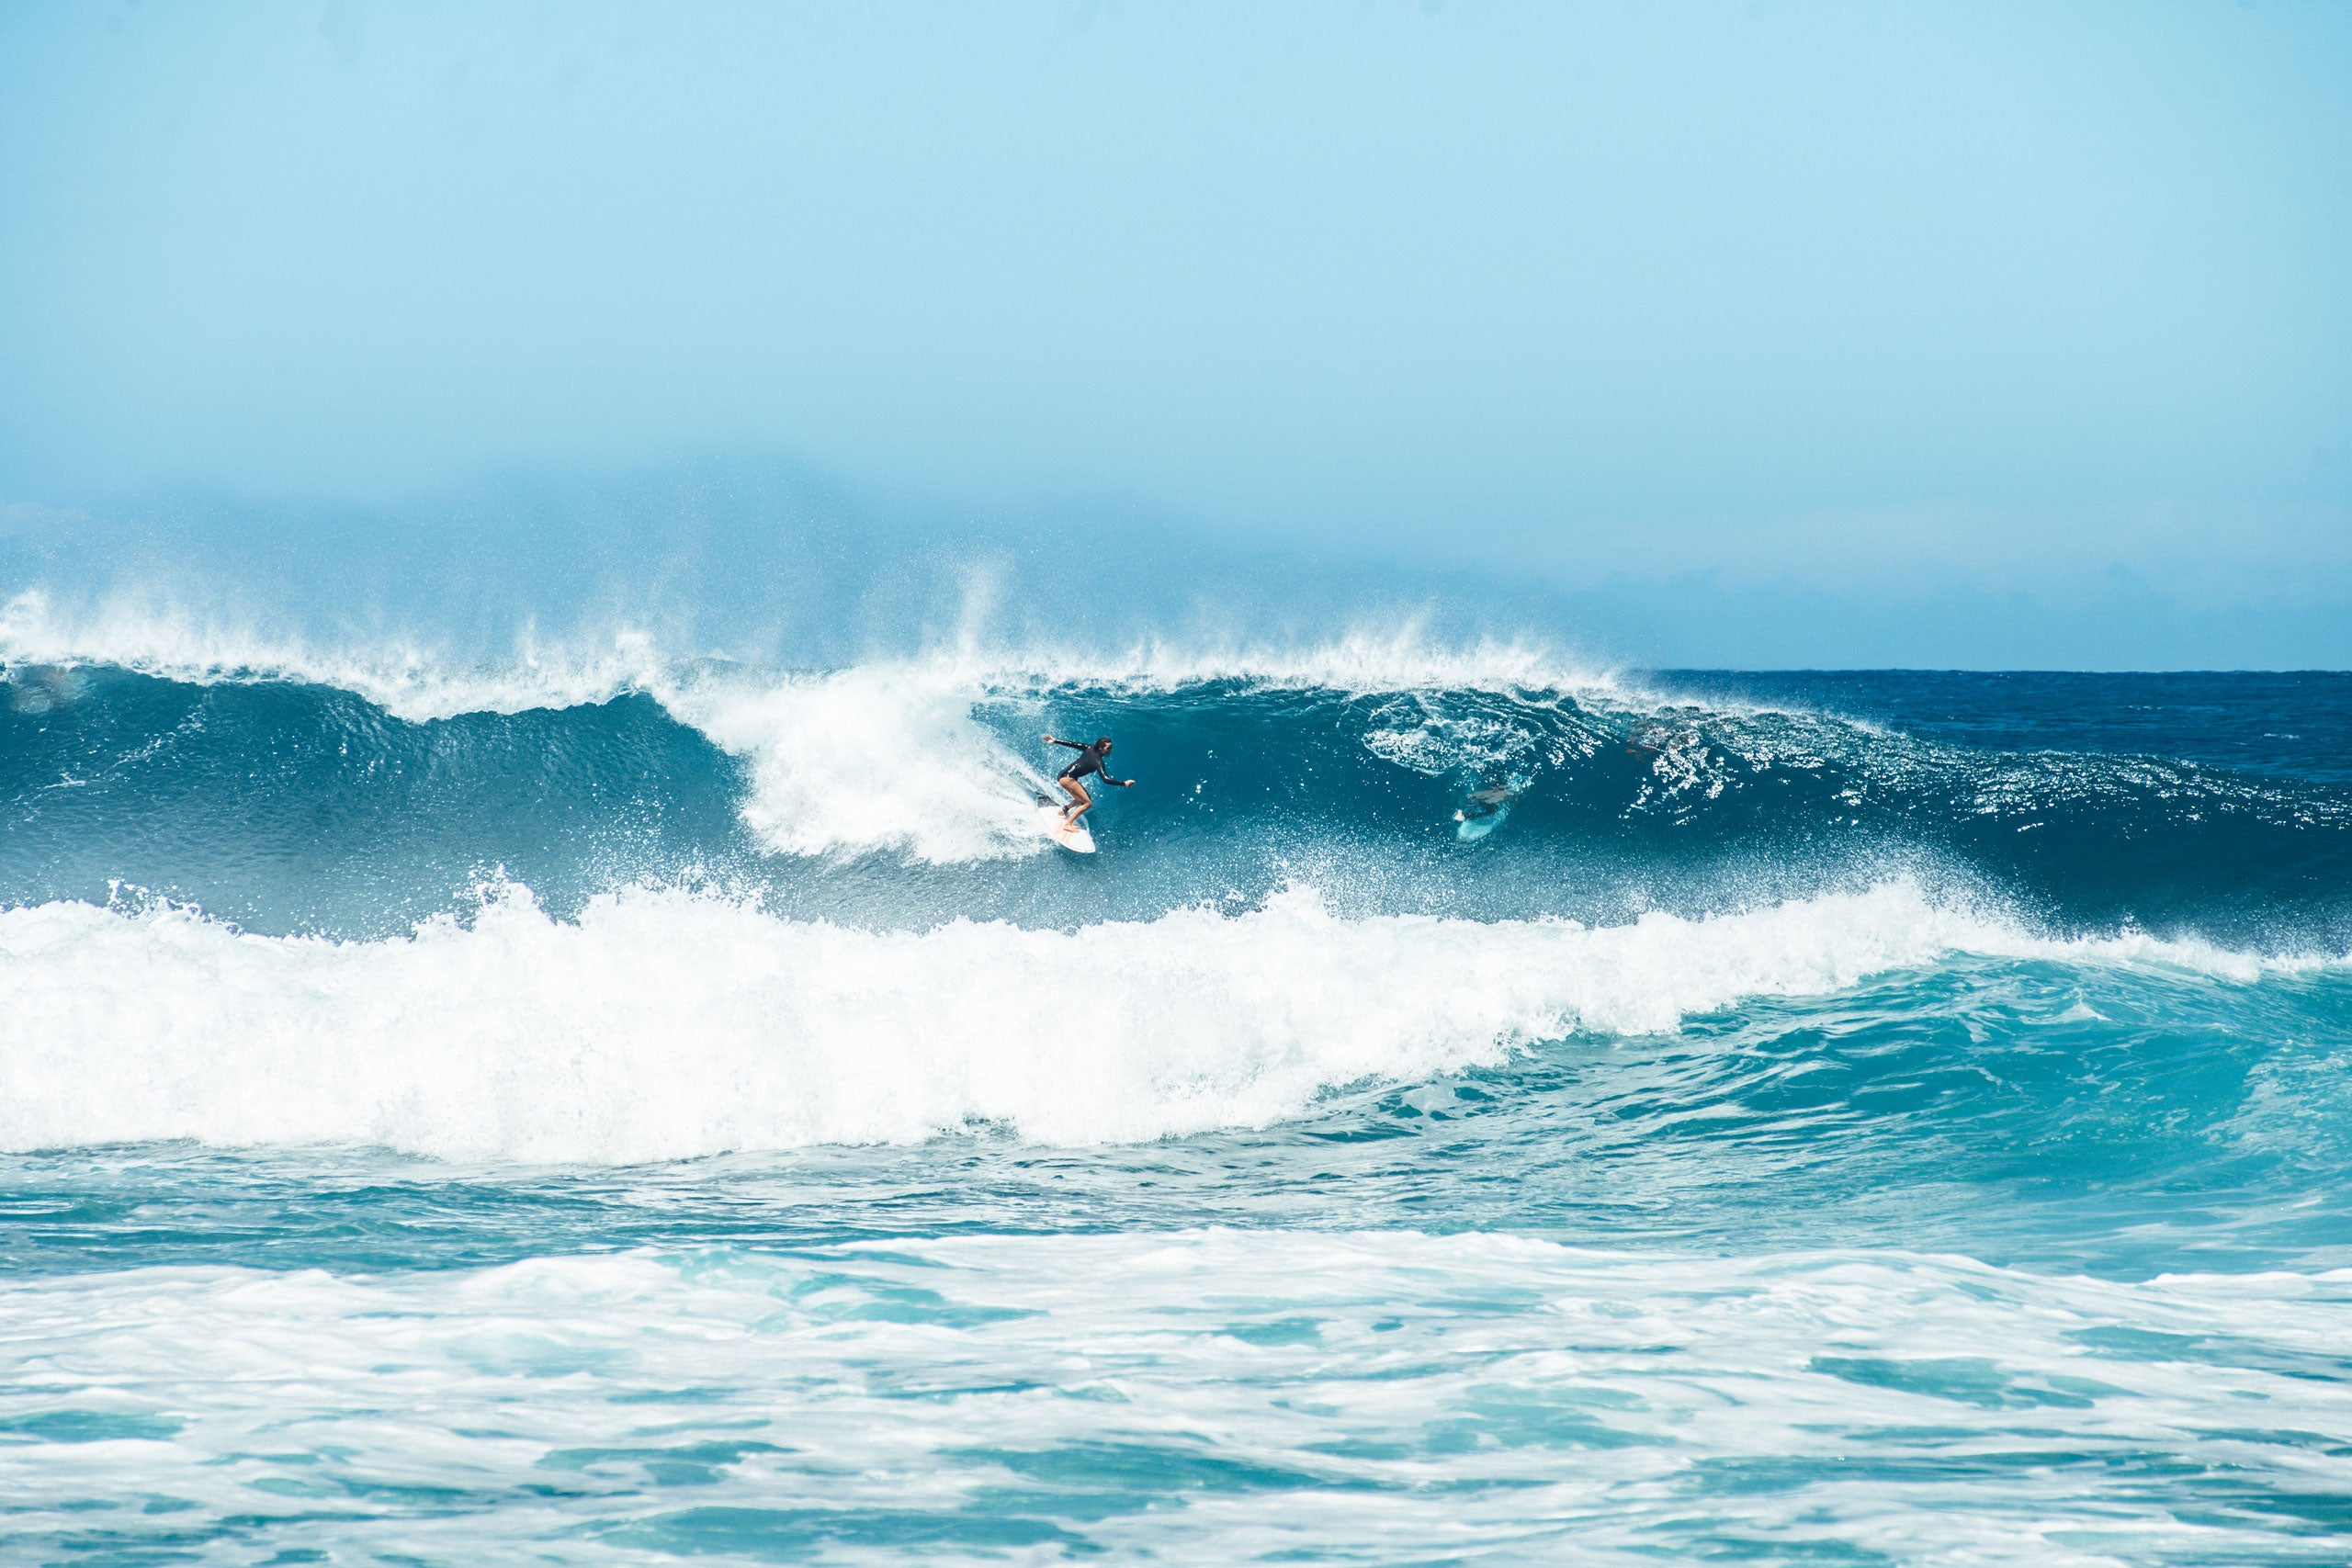 Surfer riding the waves, Oahu, Hawaii